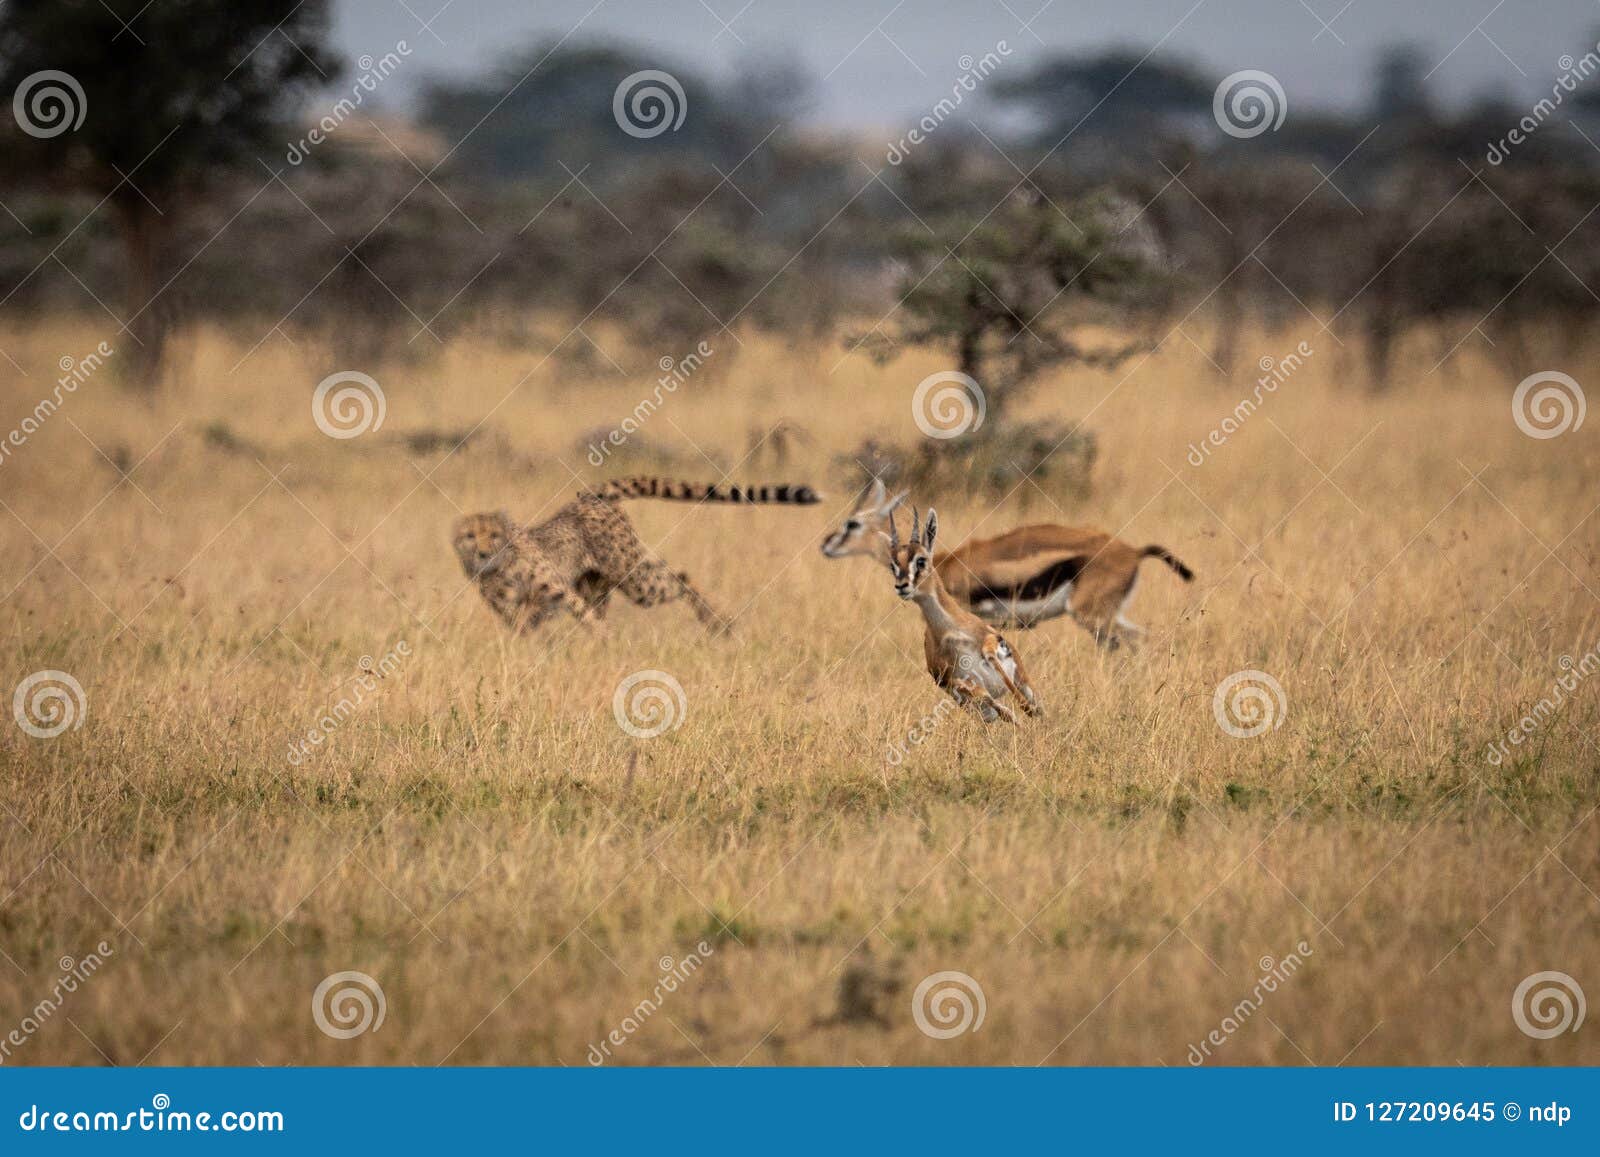 cheetah chasing two thomson gazelle in savannah